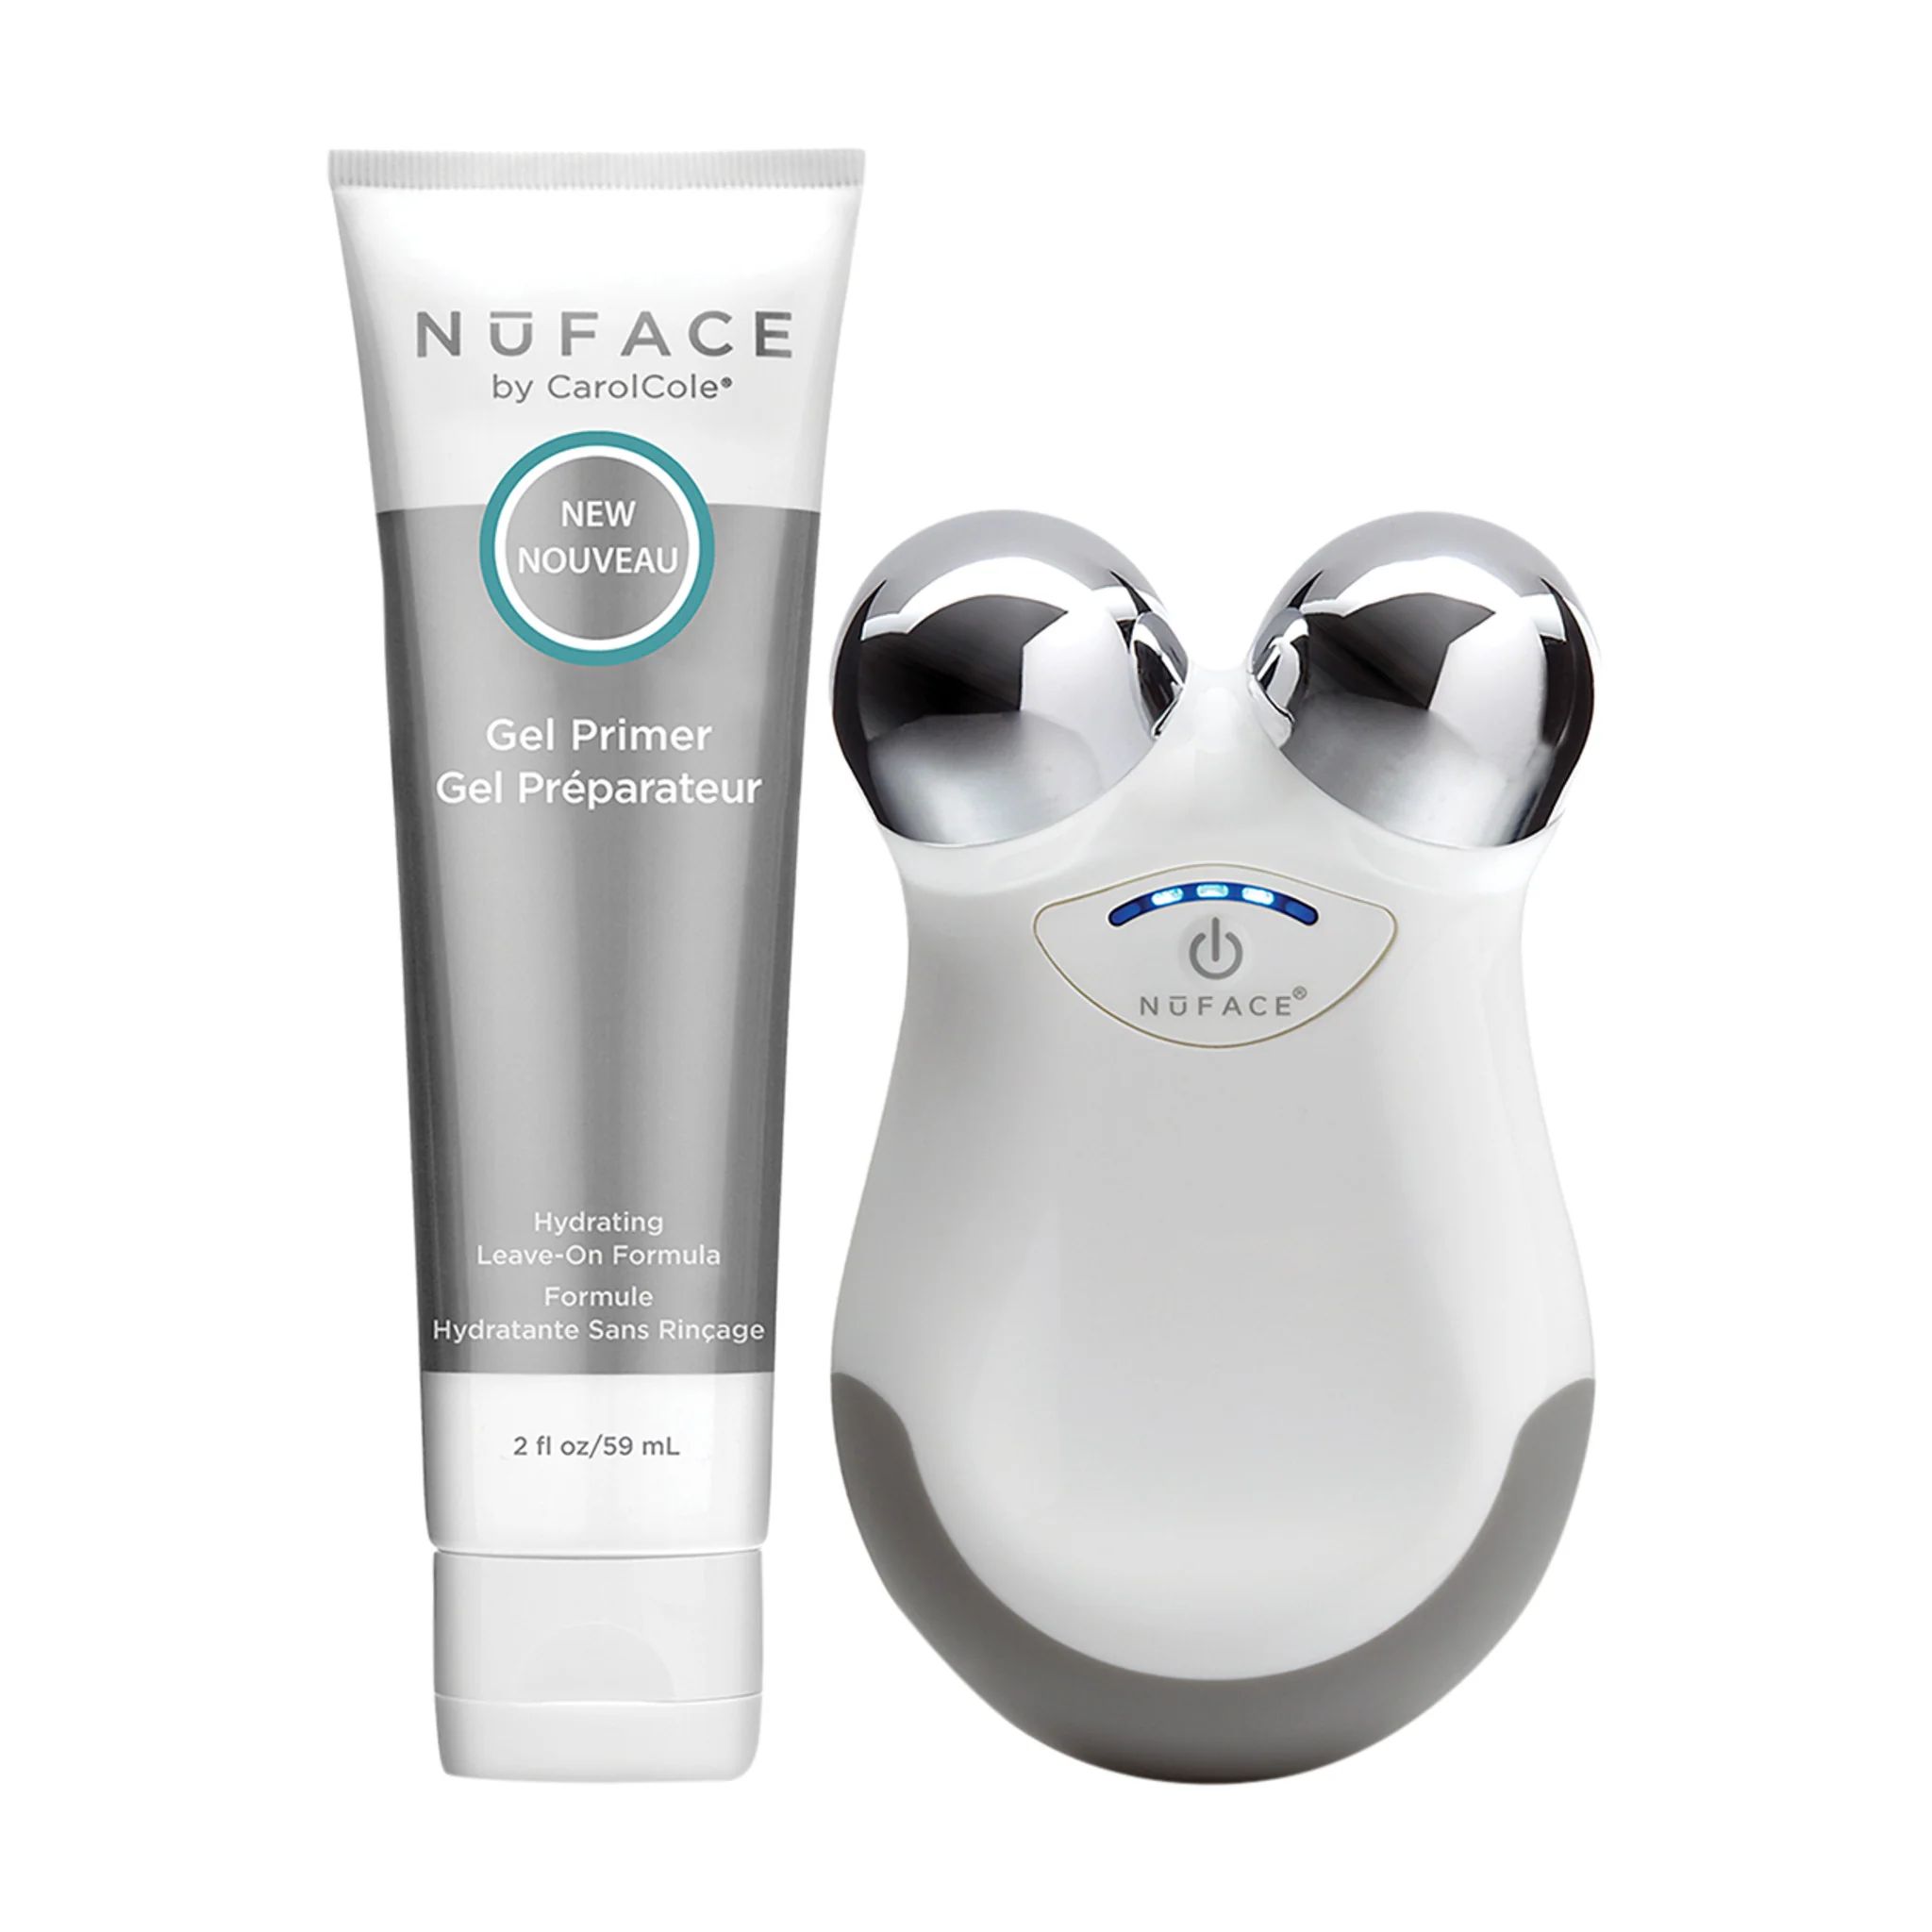 NuFACE Mini Facial Toning Device | Bluemercury, Inc.